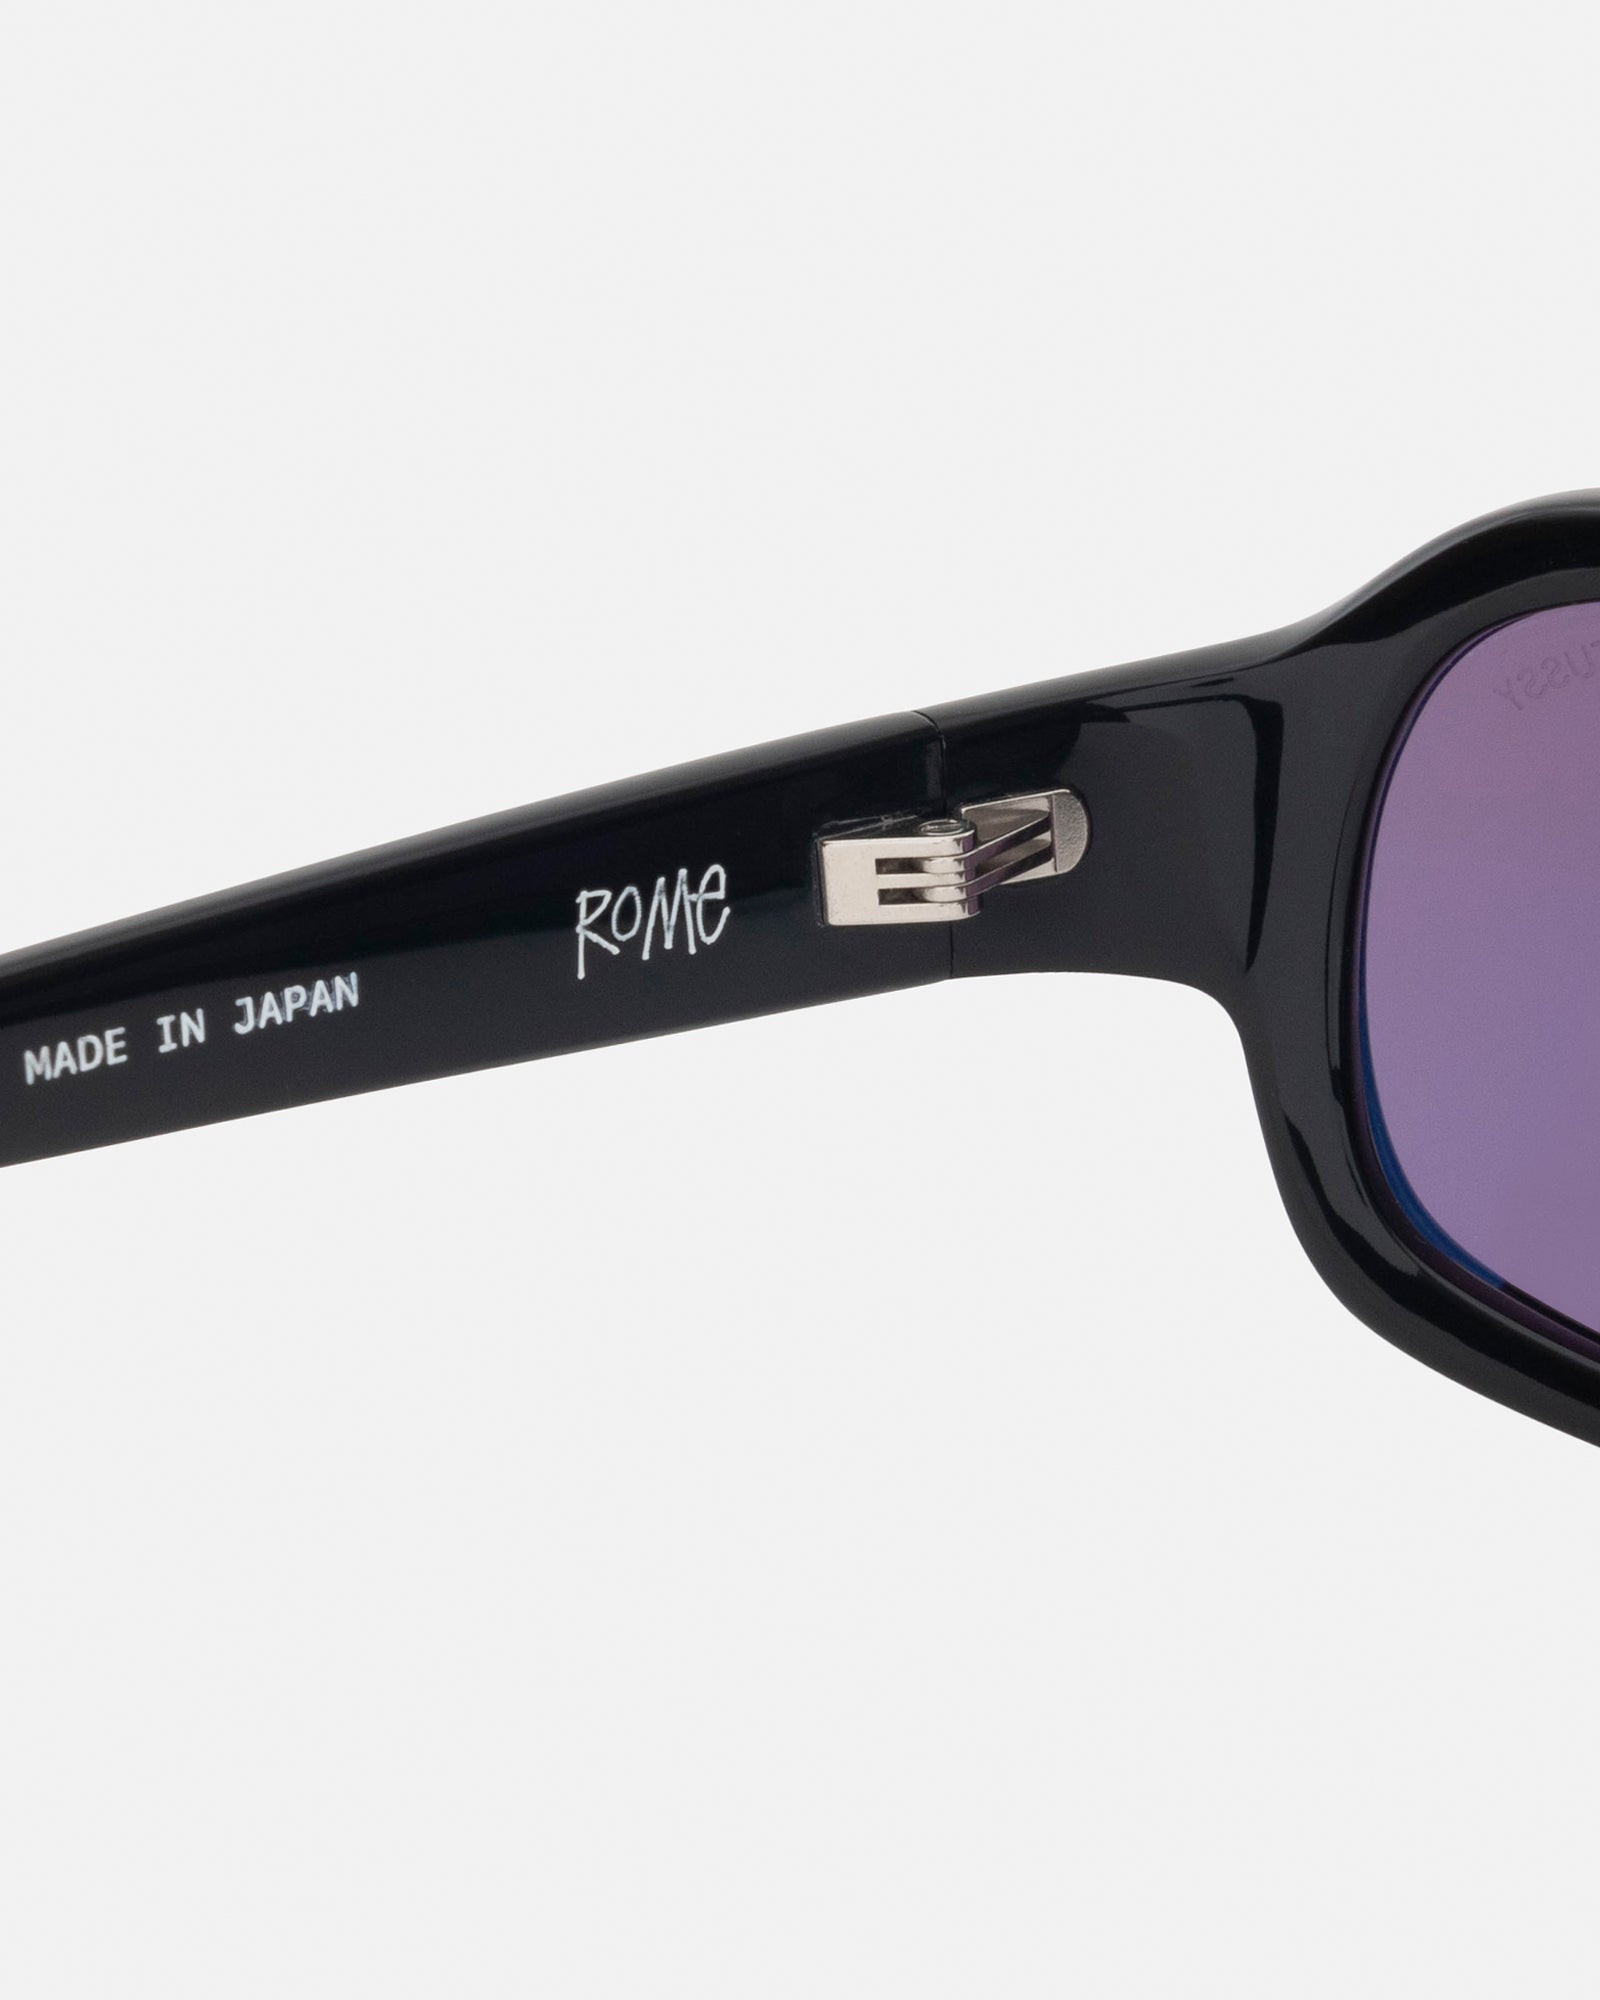 Rome Sunglasses in black / lavender – Stüssy Japan